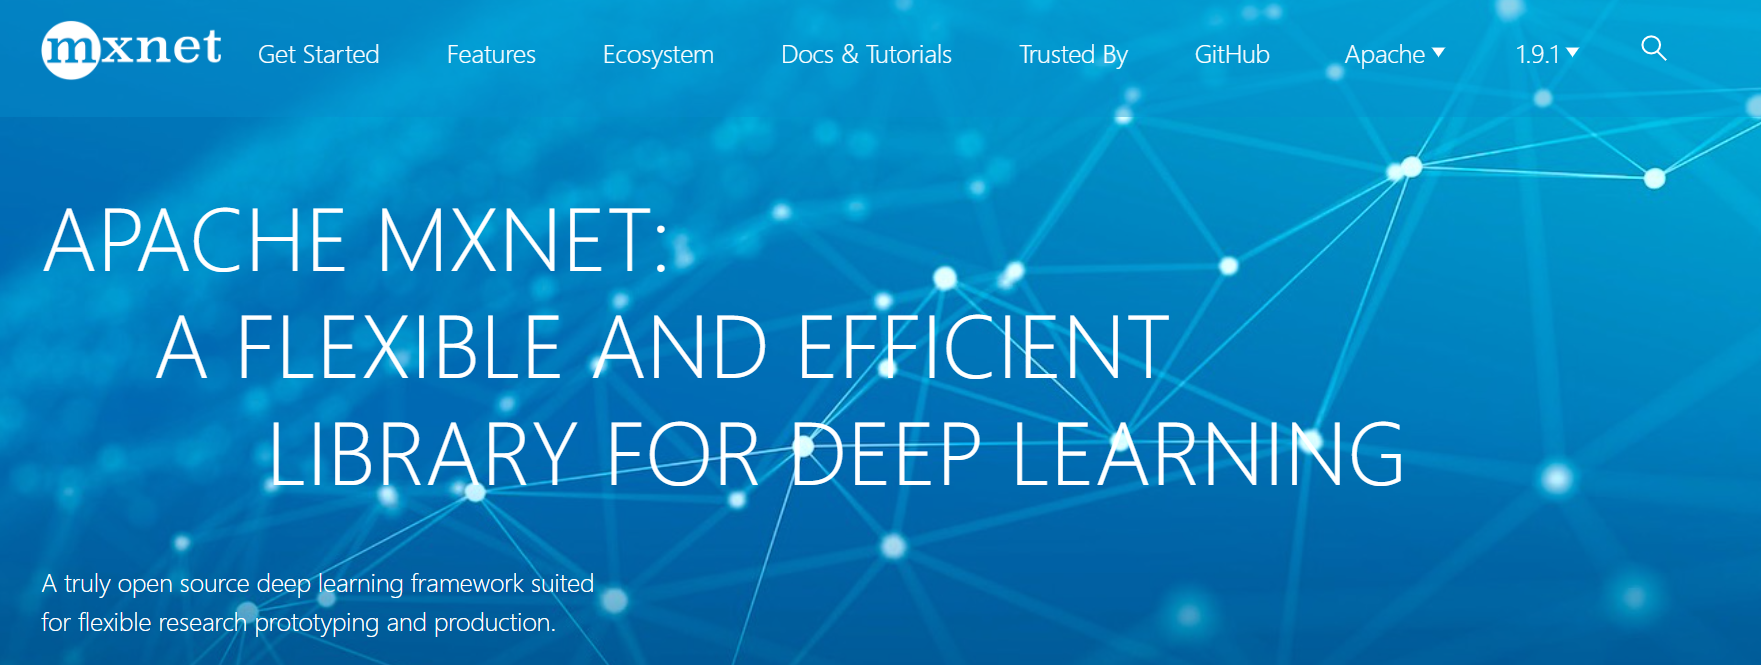 Mxnet Homepage